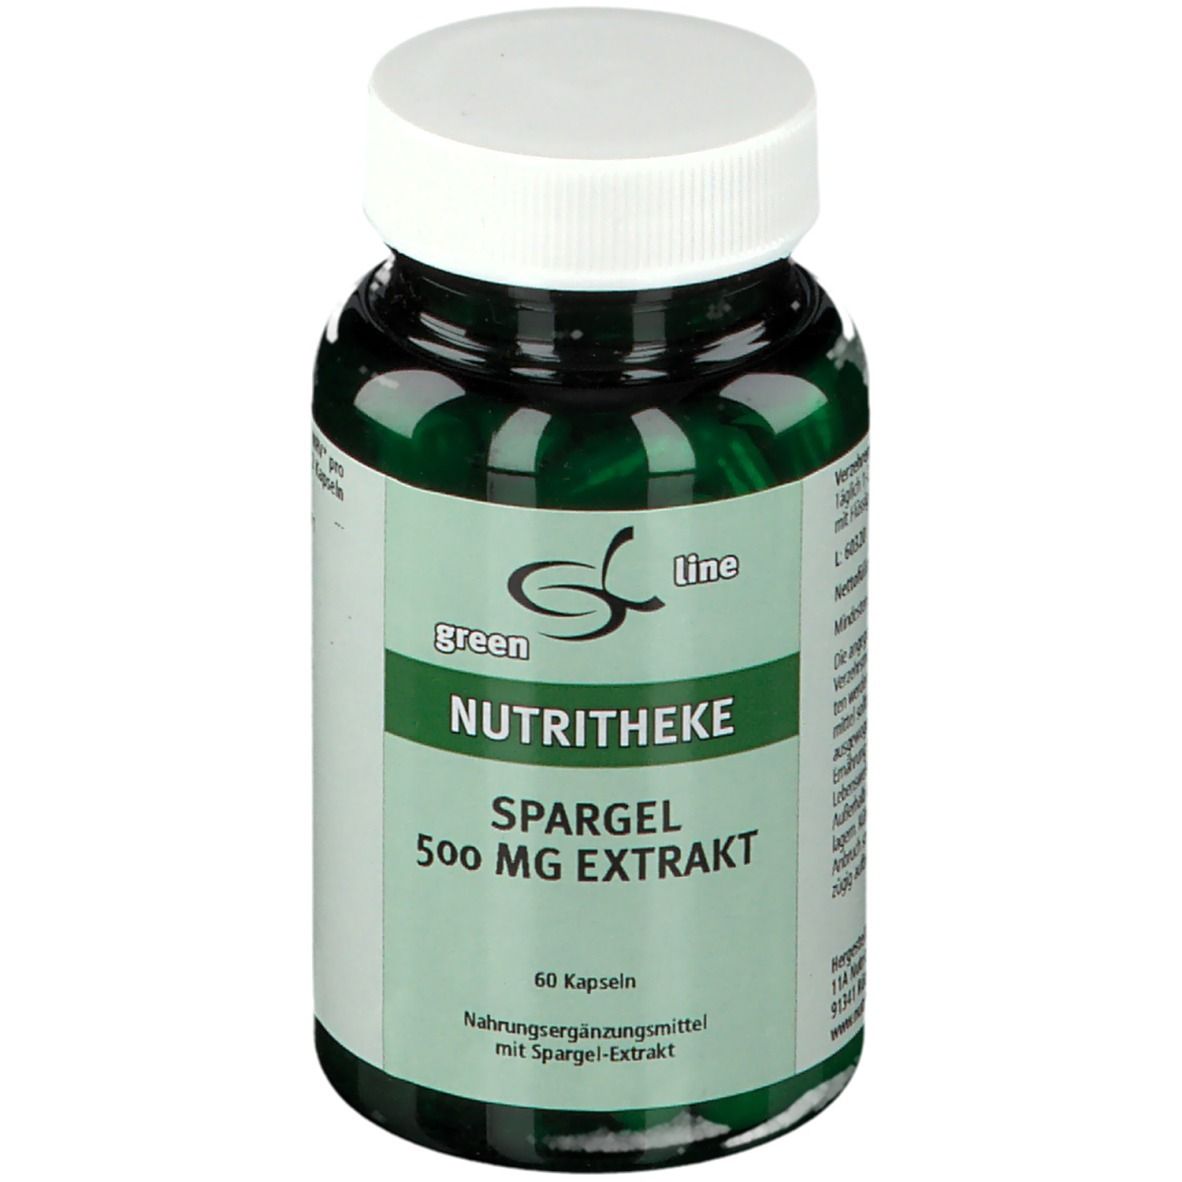 Image of green line SPARGEL 500 mg Extrakt